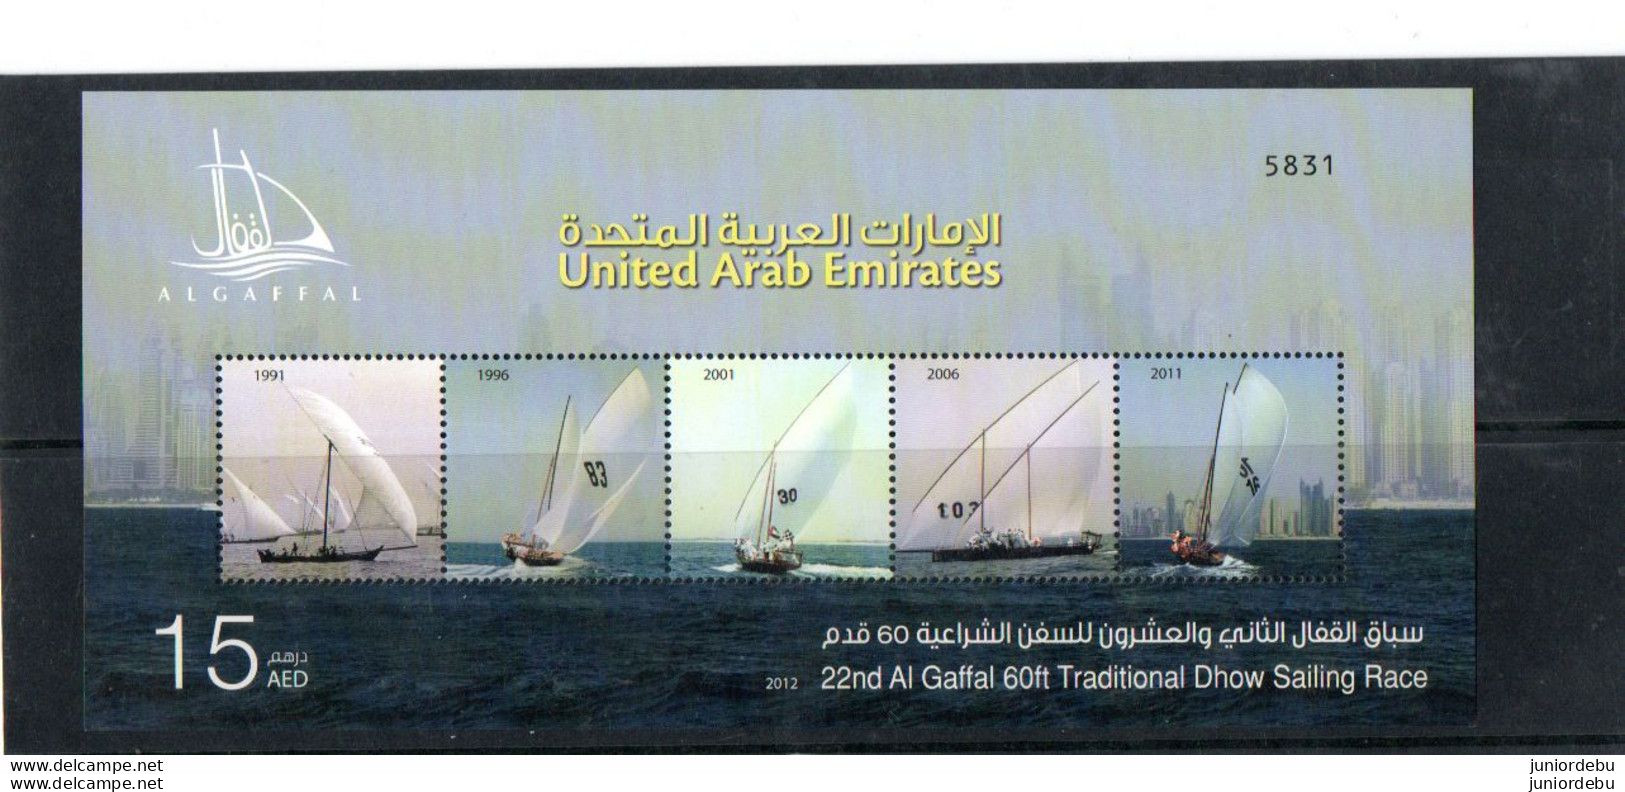 UAE - 2012 - The 22nd Al Gaffal Dhow Sailing Race - Miniature Sheet - MNH. ( OL 11/12/2022) - United Arab Emirates (General)